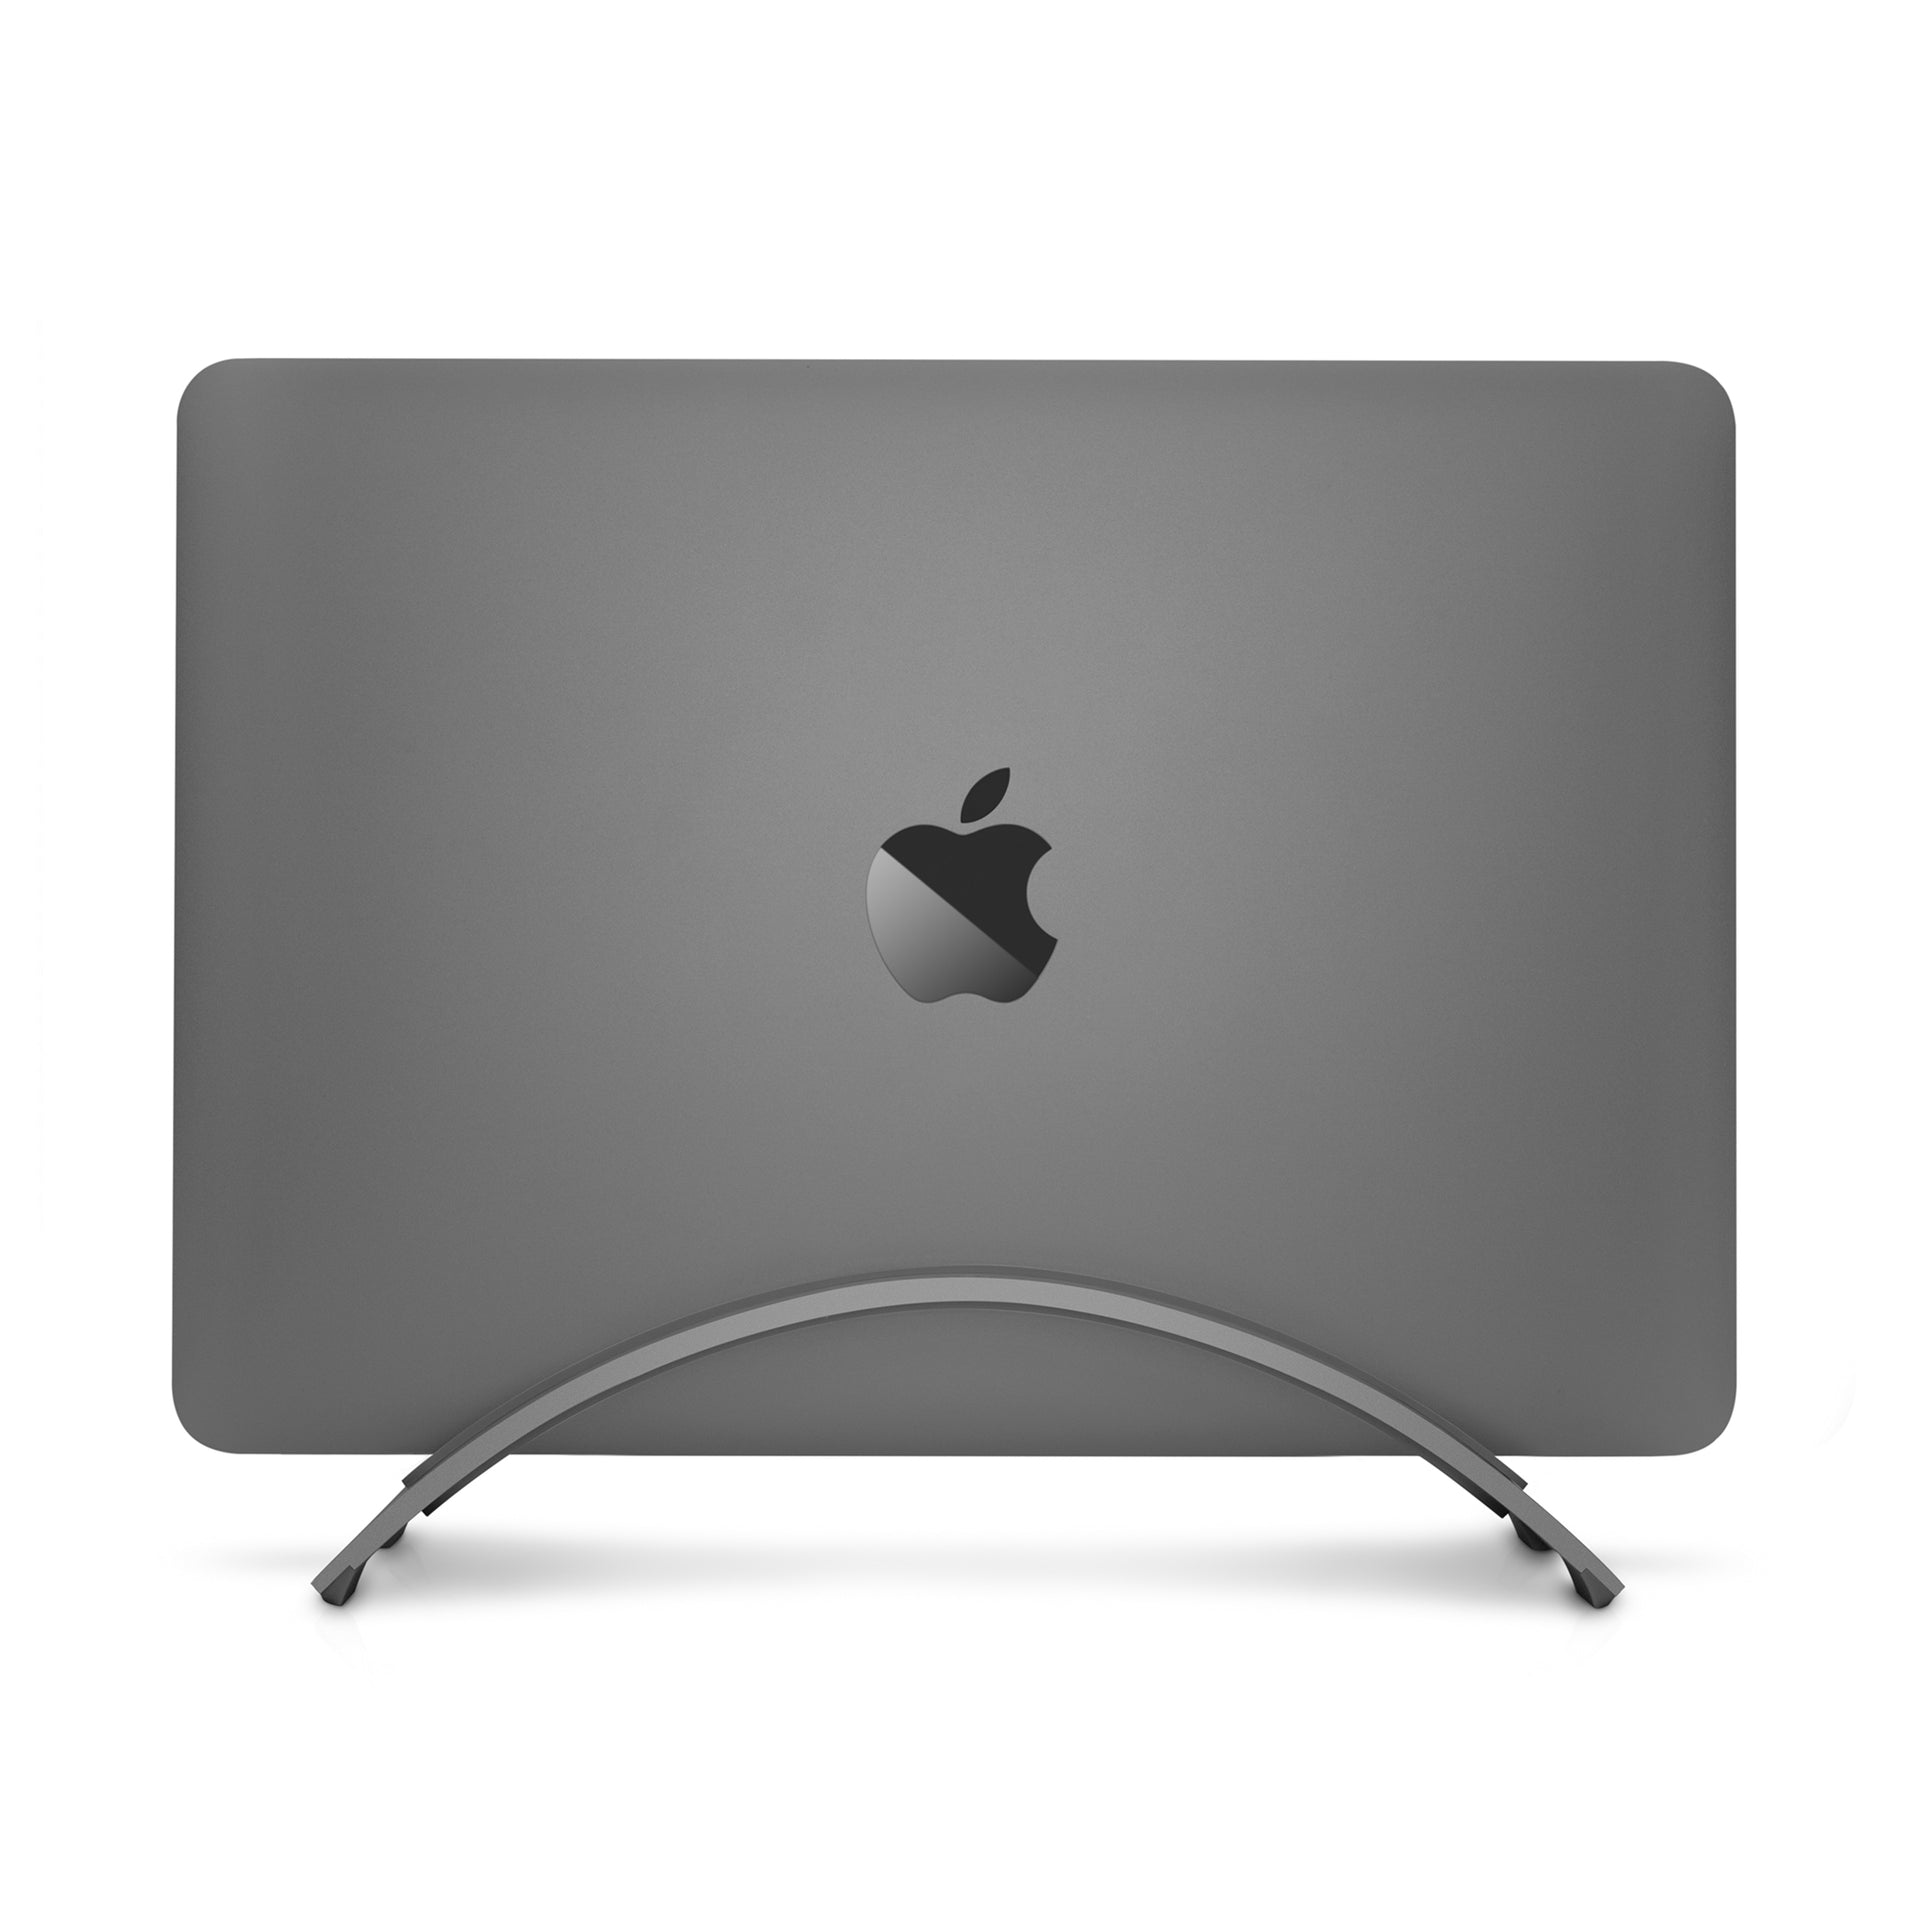  BookArc for Apple MacBook in Space Grey by Twelve South